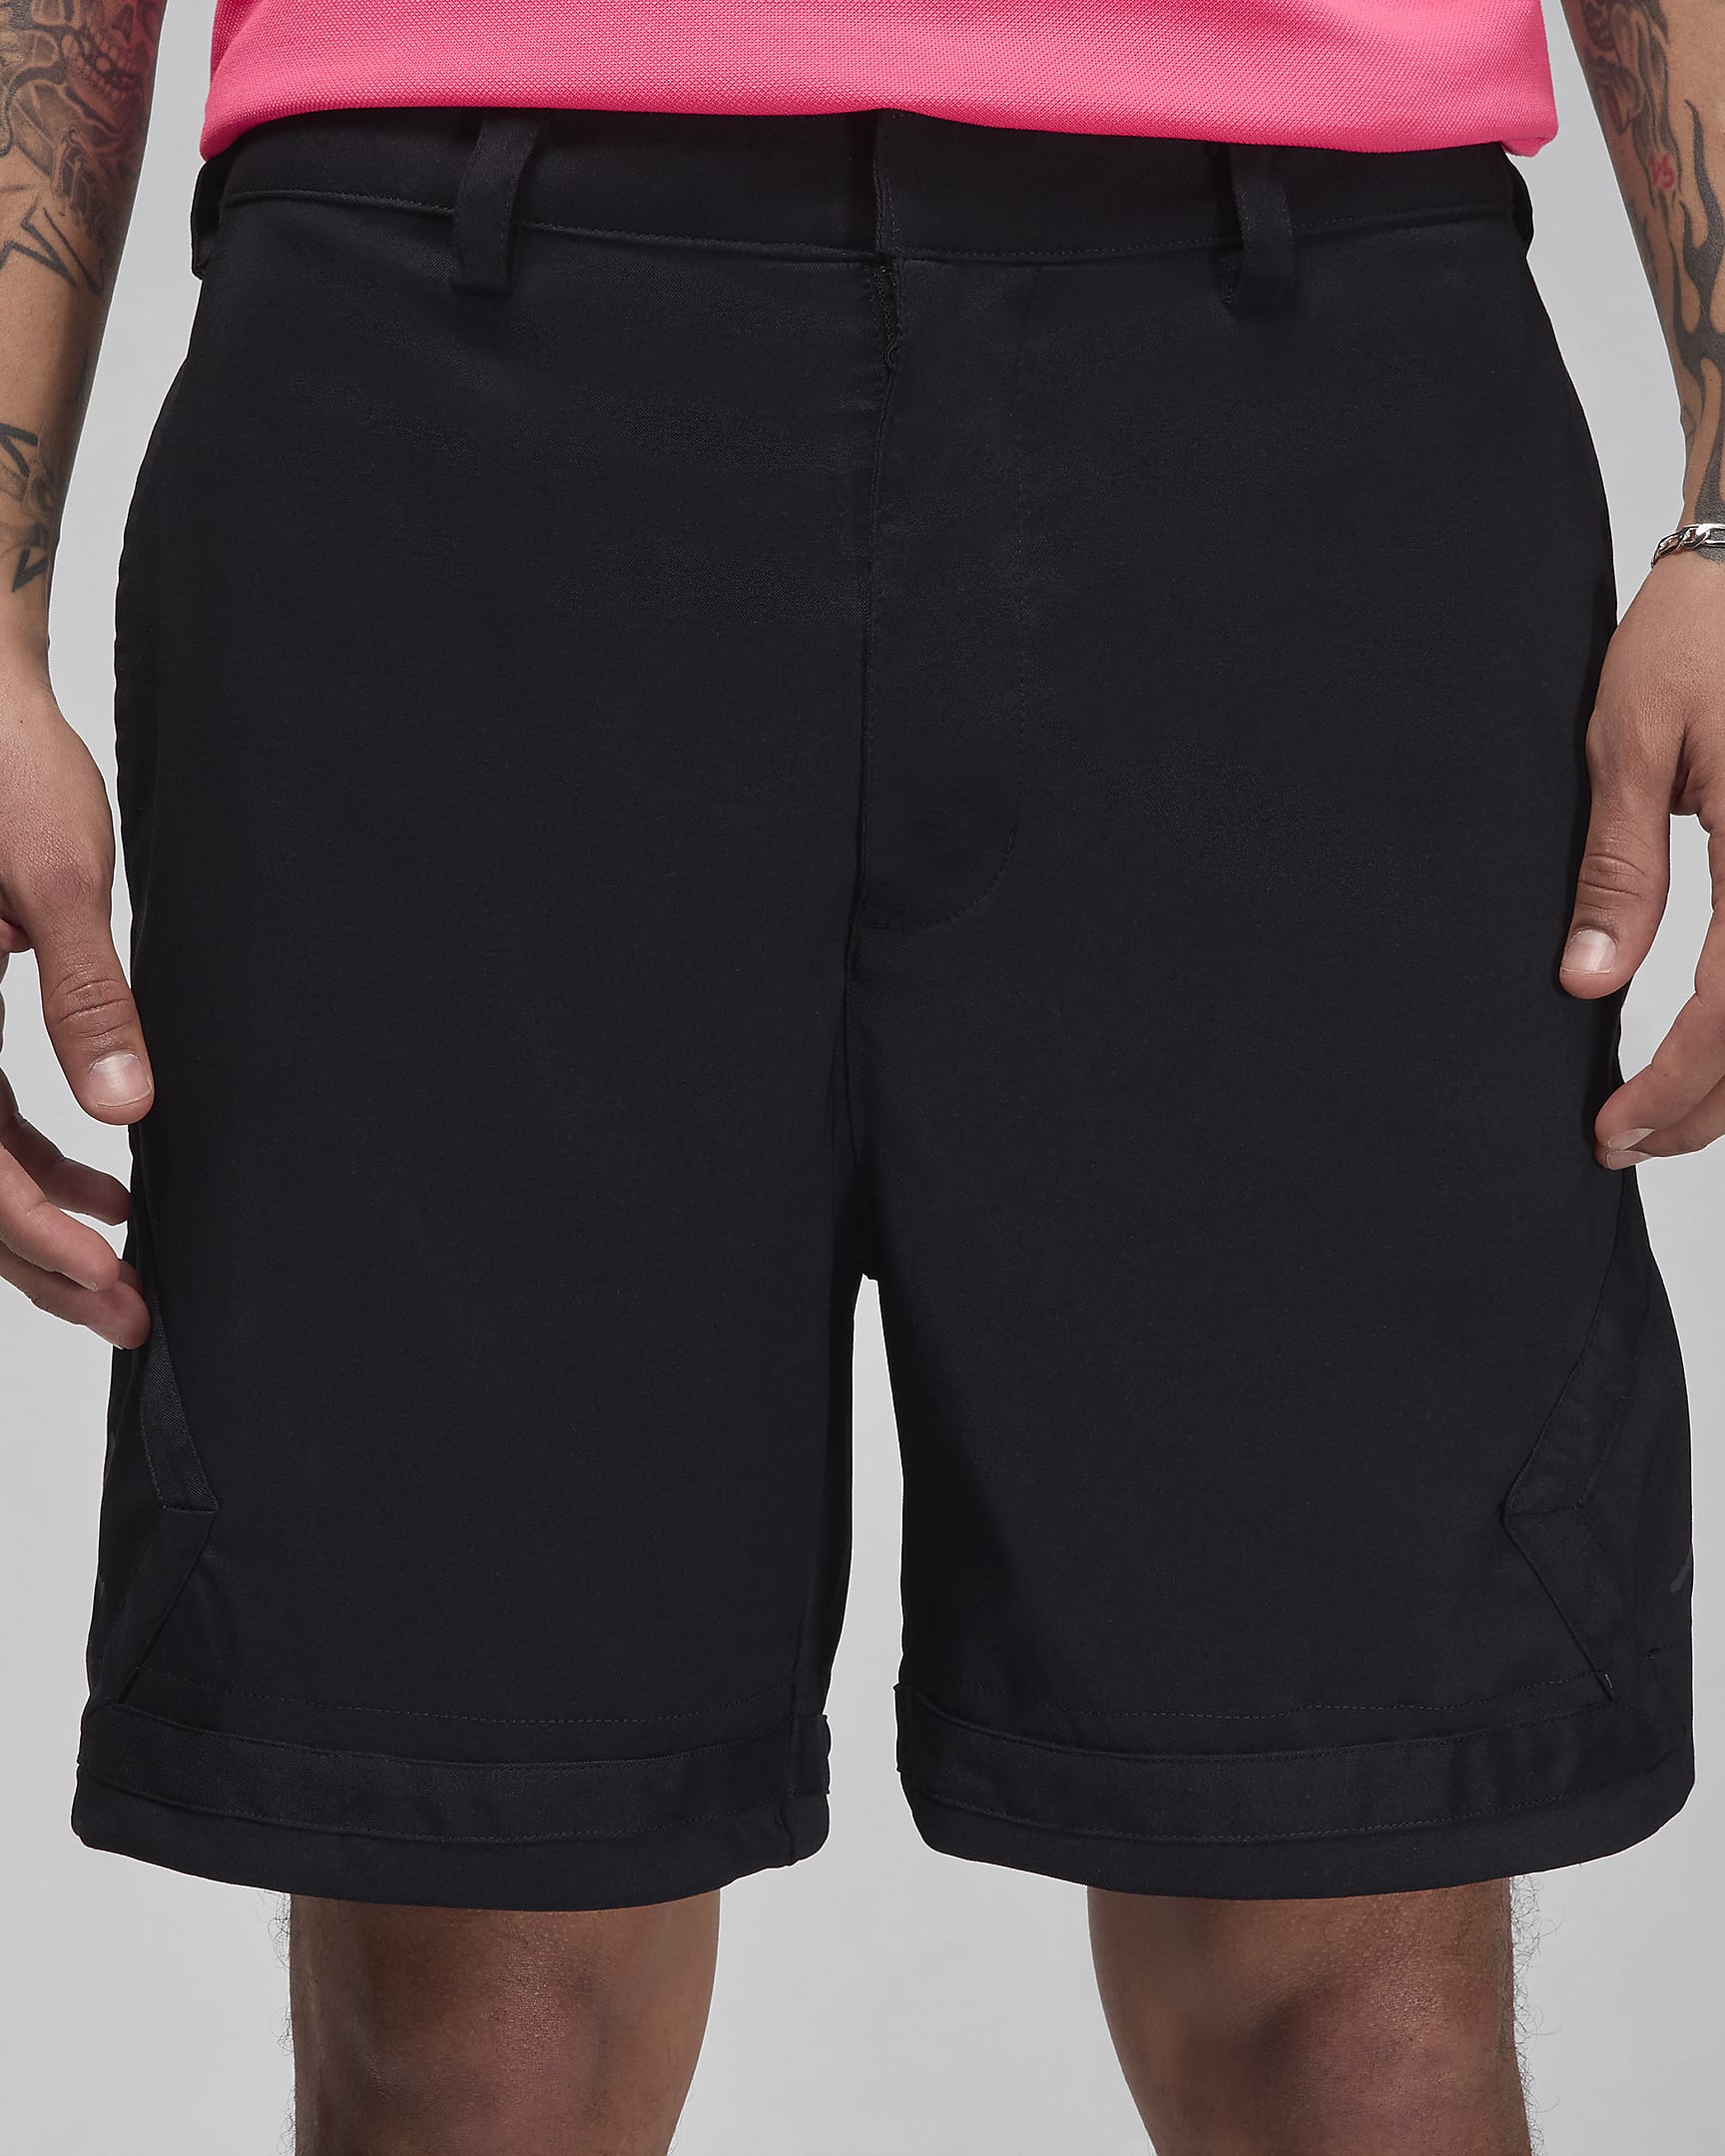 Jordan Dri-FIT Sport Men's Golf Diamond Shorts - Black/Anthracite